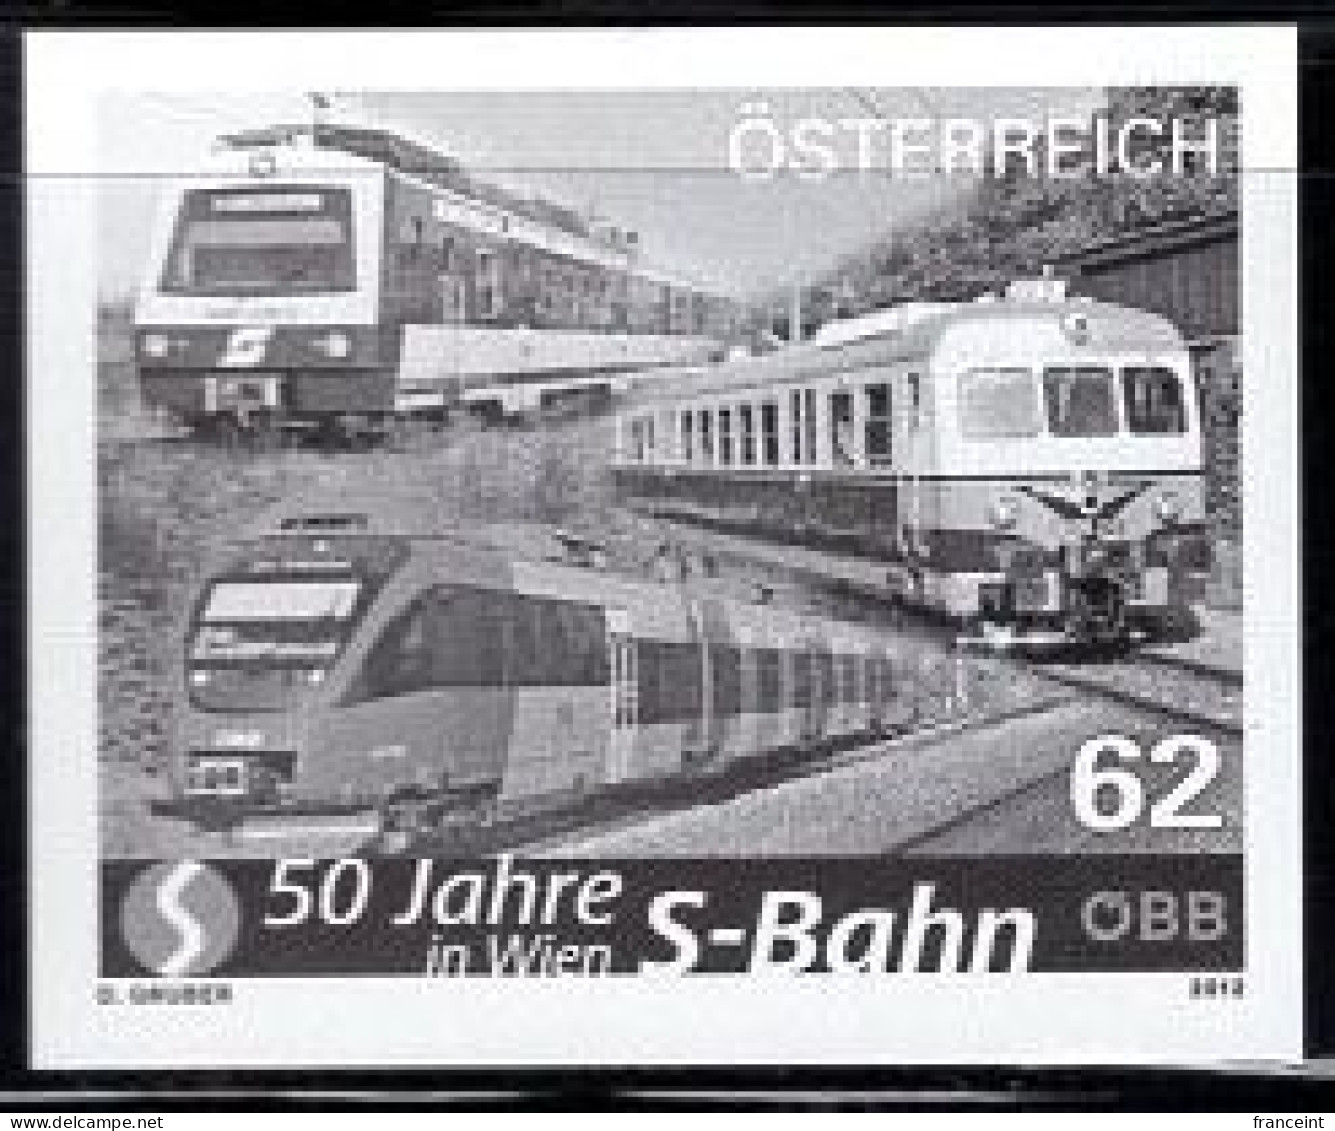 AUSTRIA(2012) S-Bahn Trains. Black Print. 50th Anniversary Of Rapid Transit. - Proofs & Reprints